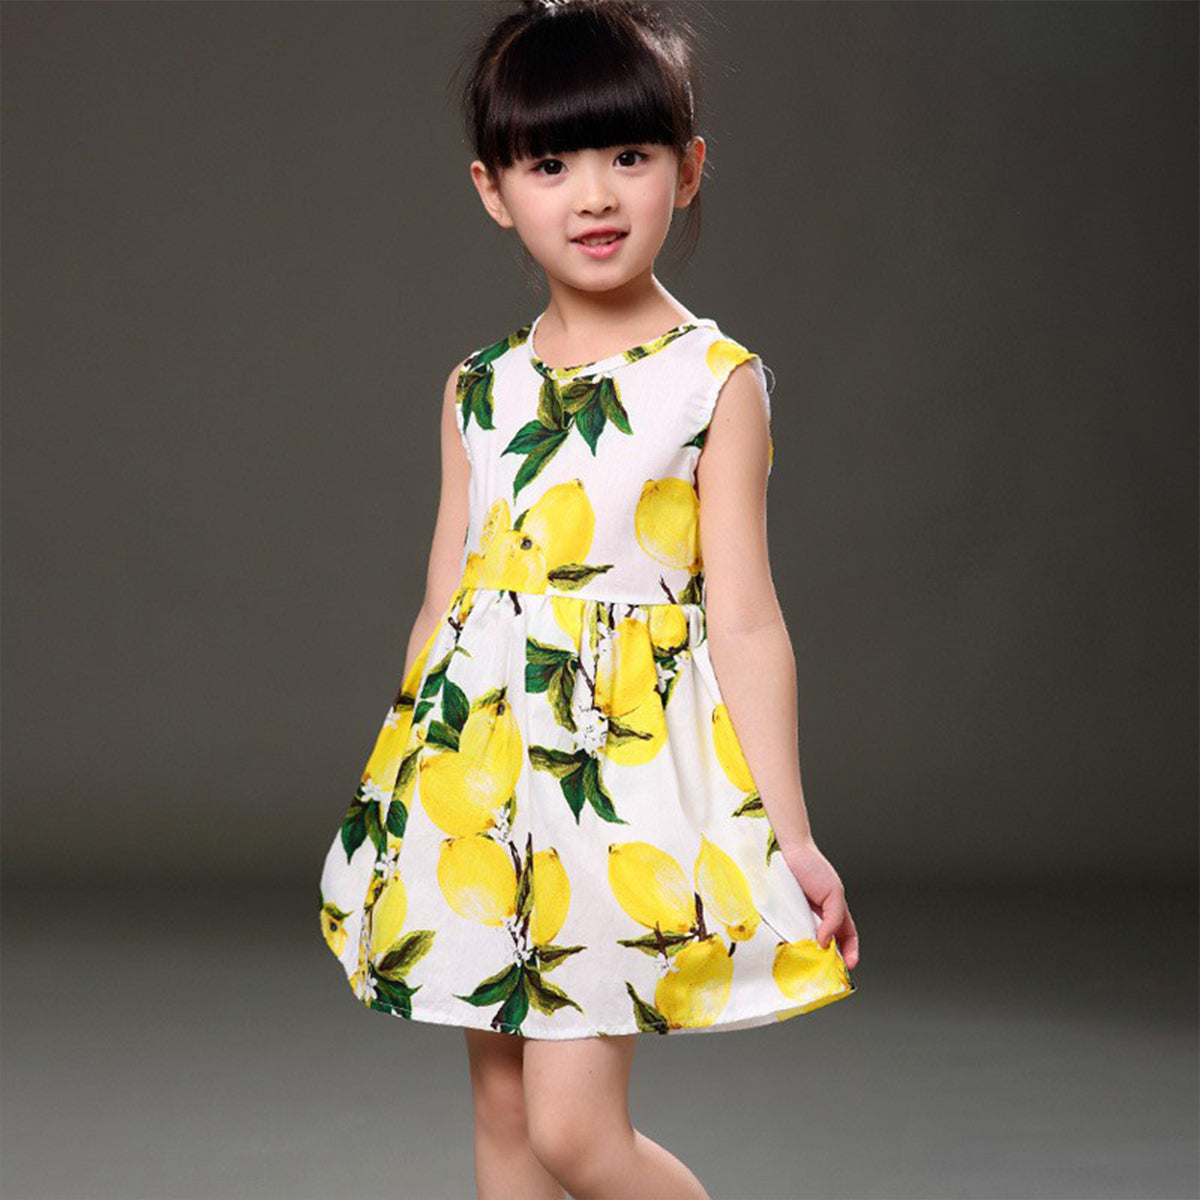 BabyGirl Cotton Orange & Black Off-White Lining Tunic Dress Combo Pack for Baby Girls.